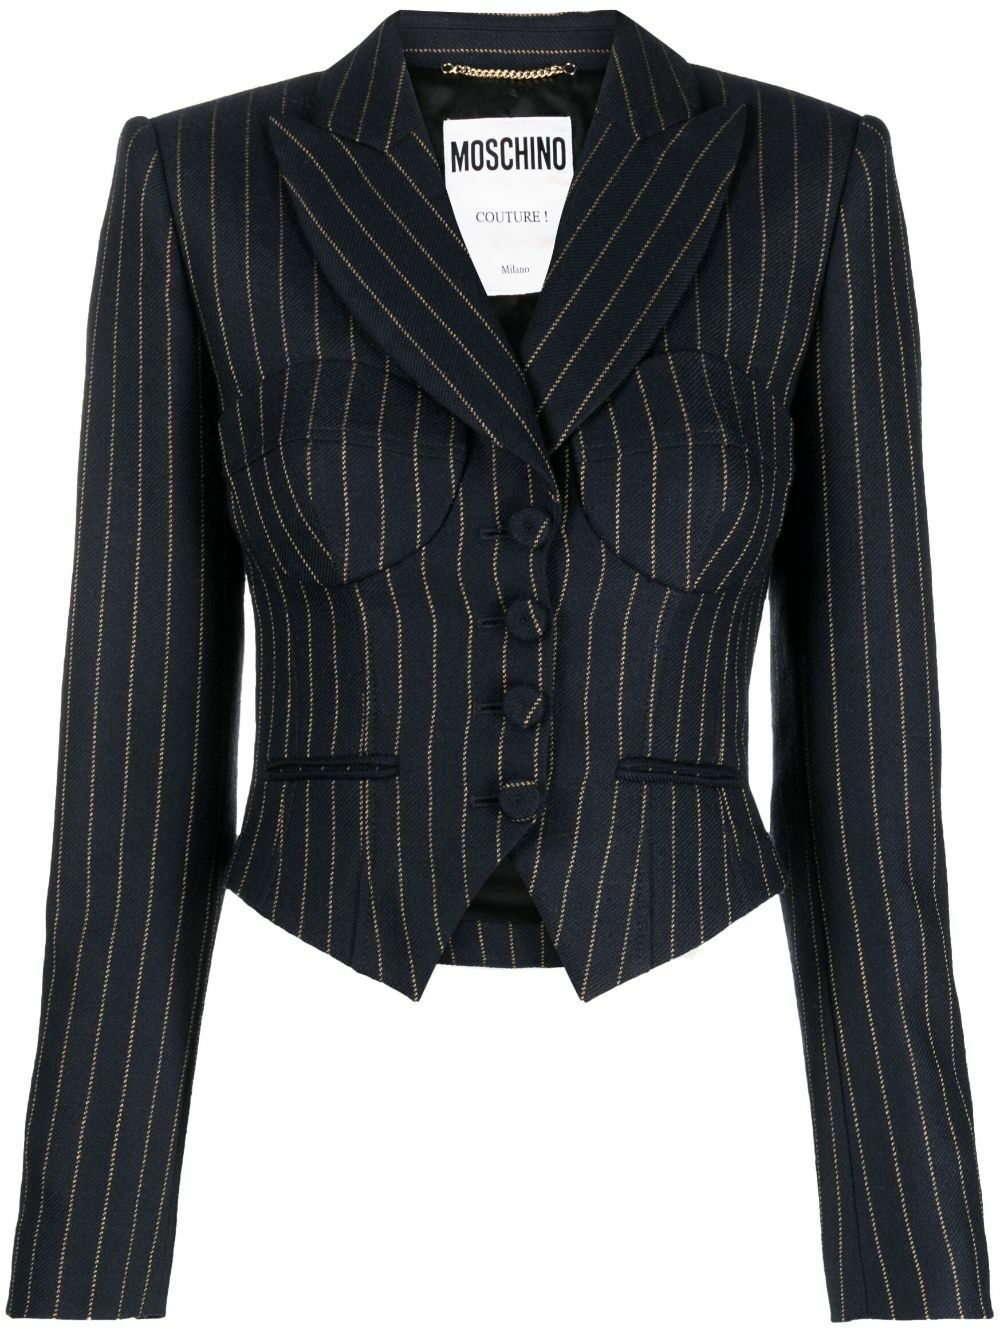 MOSCHINO - Jacket With Stripes Moschino